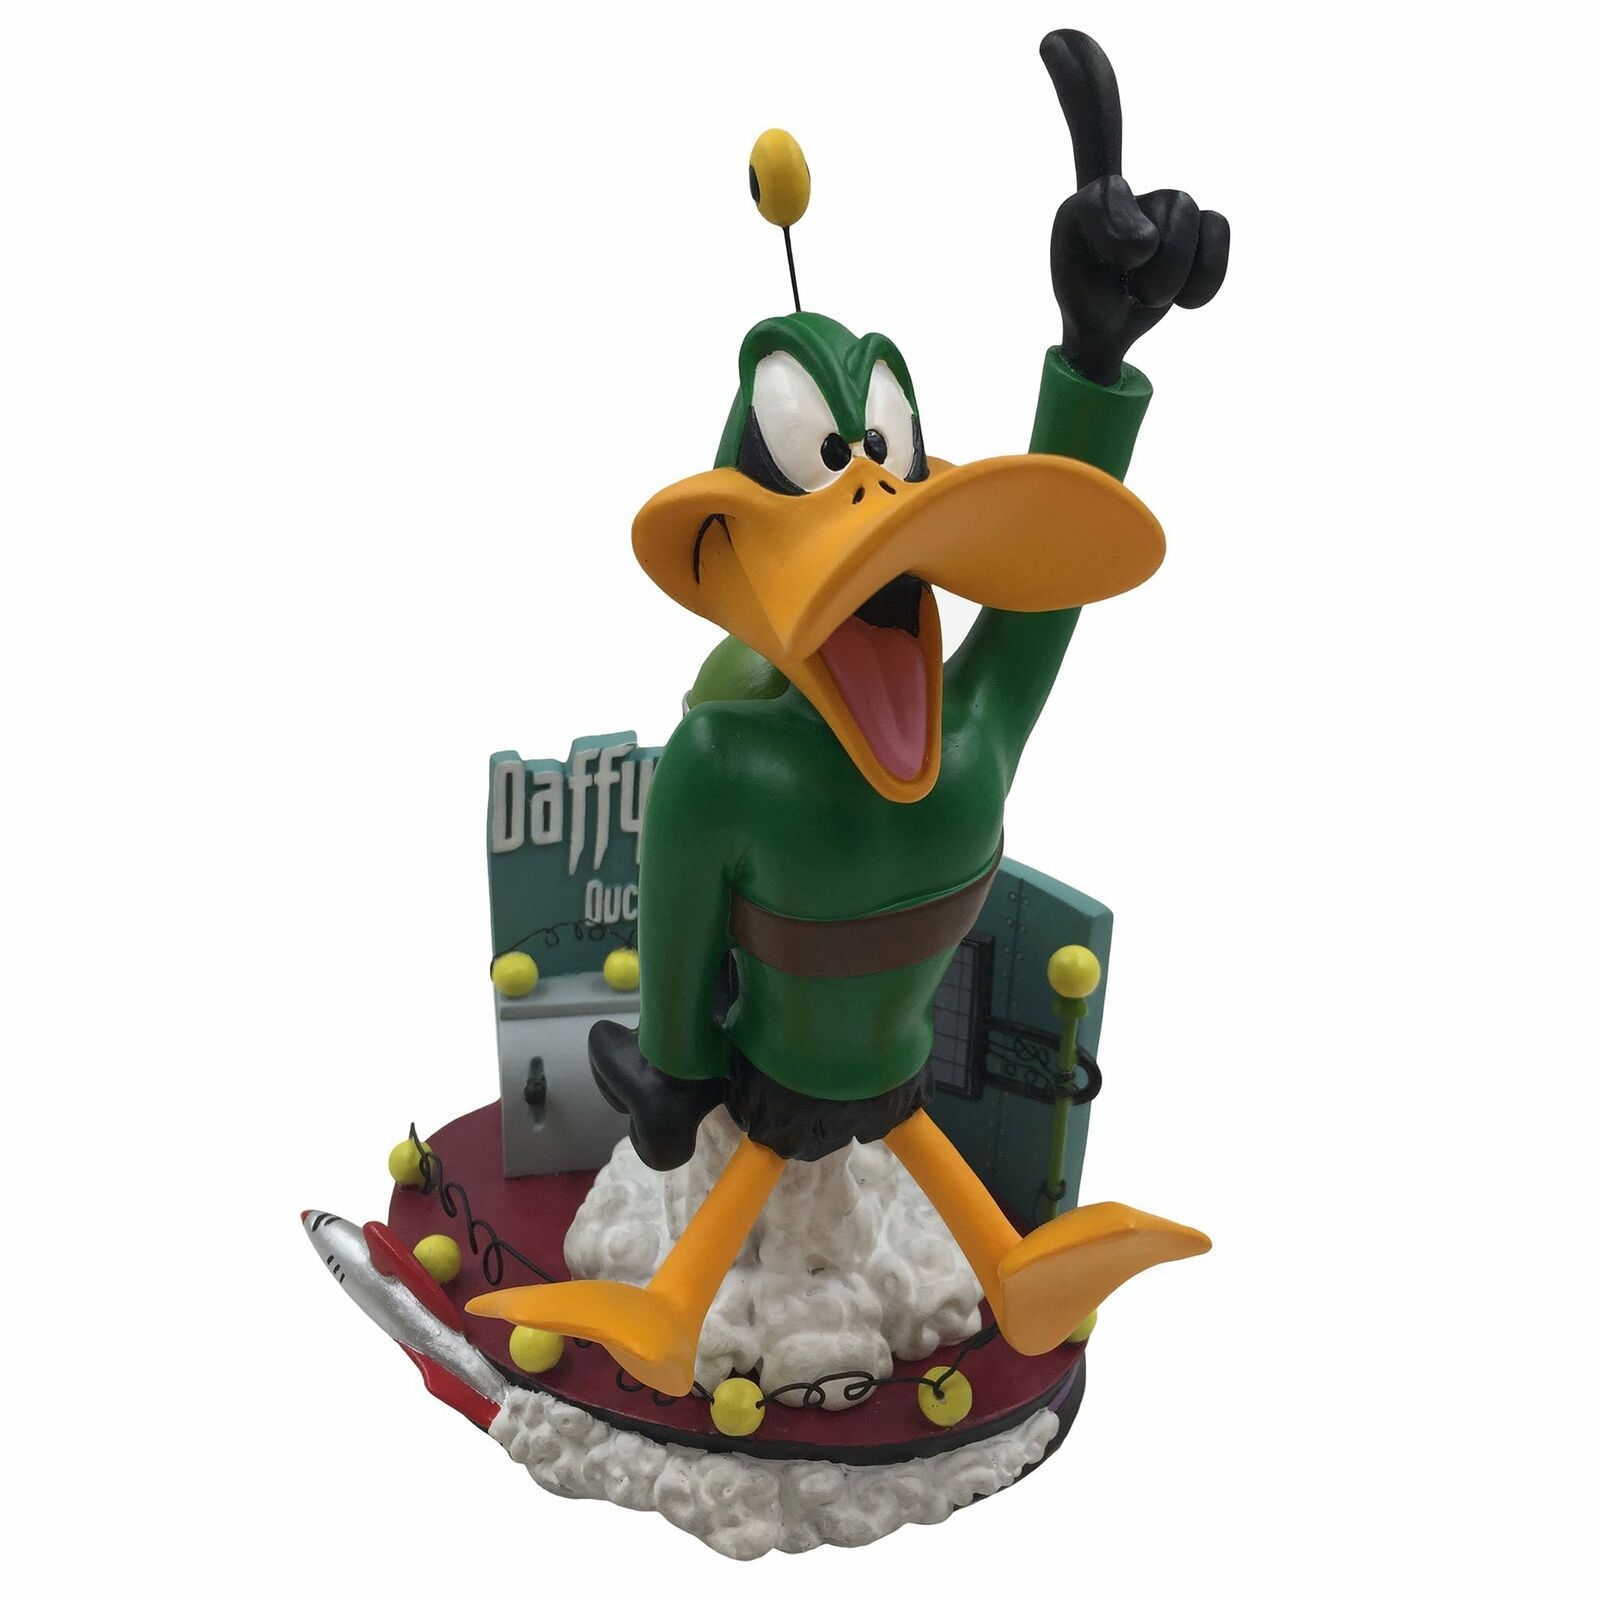 Daffy Duck Looney Tunes Limited Edition Bobblehead